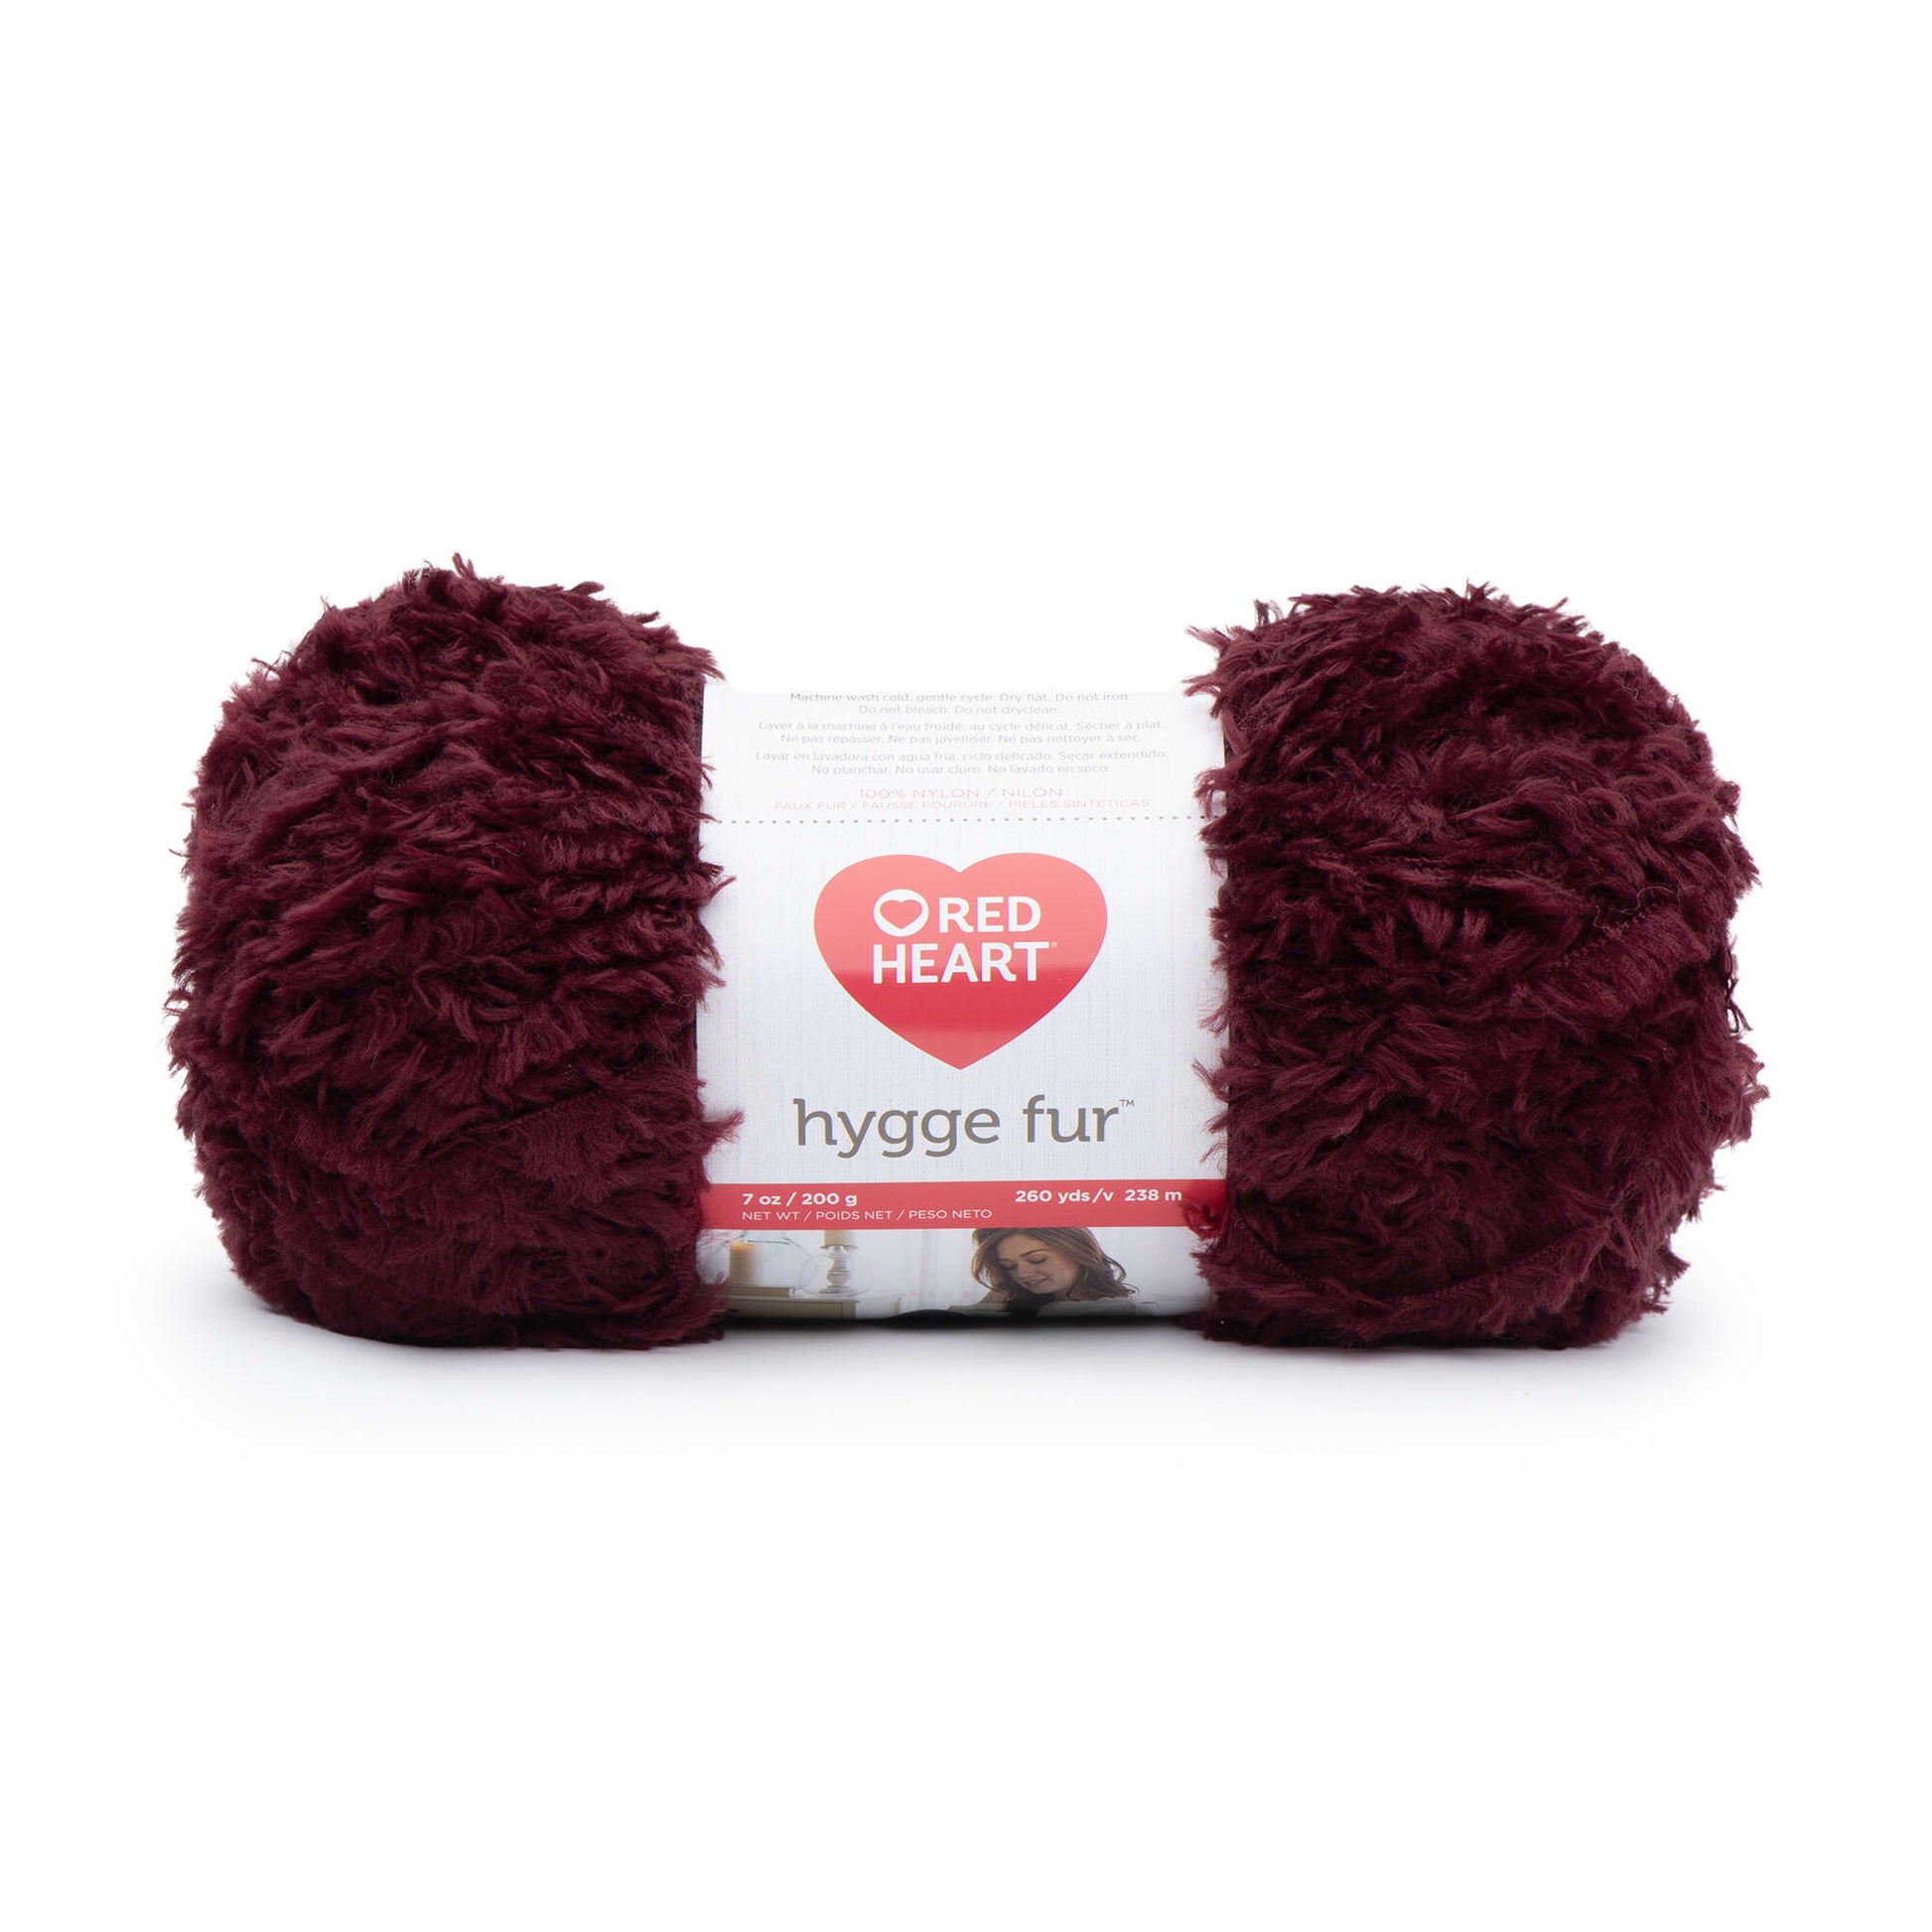 Red Heart Hygge Fur Yarn - Discontinued shades